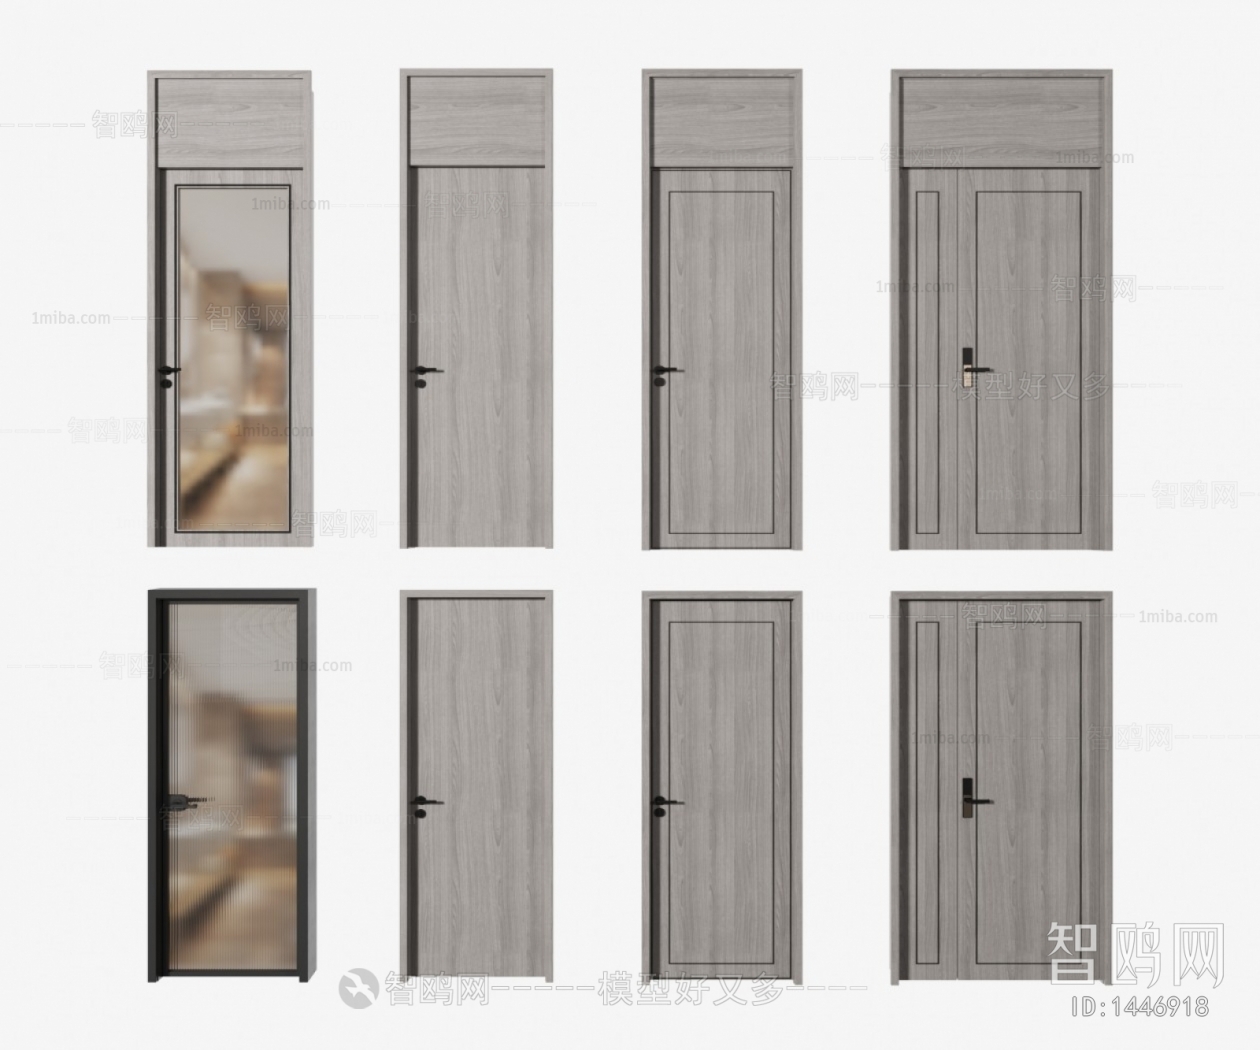 New Chinese Style Single Door